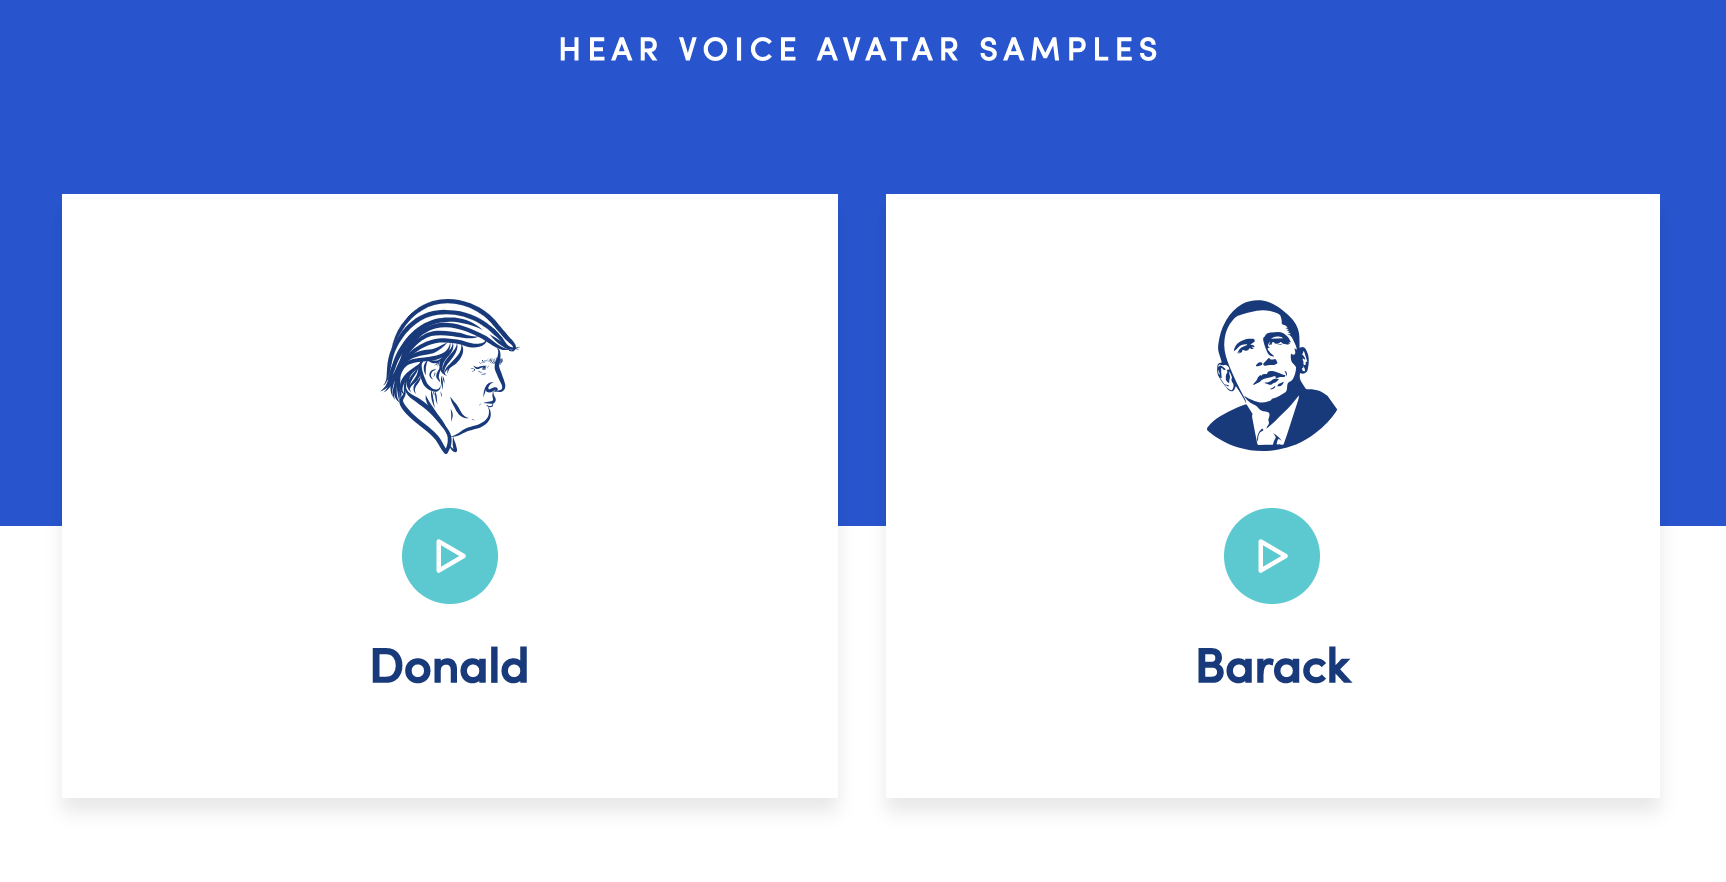 Lyrebird voice avatars created by machine learning